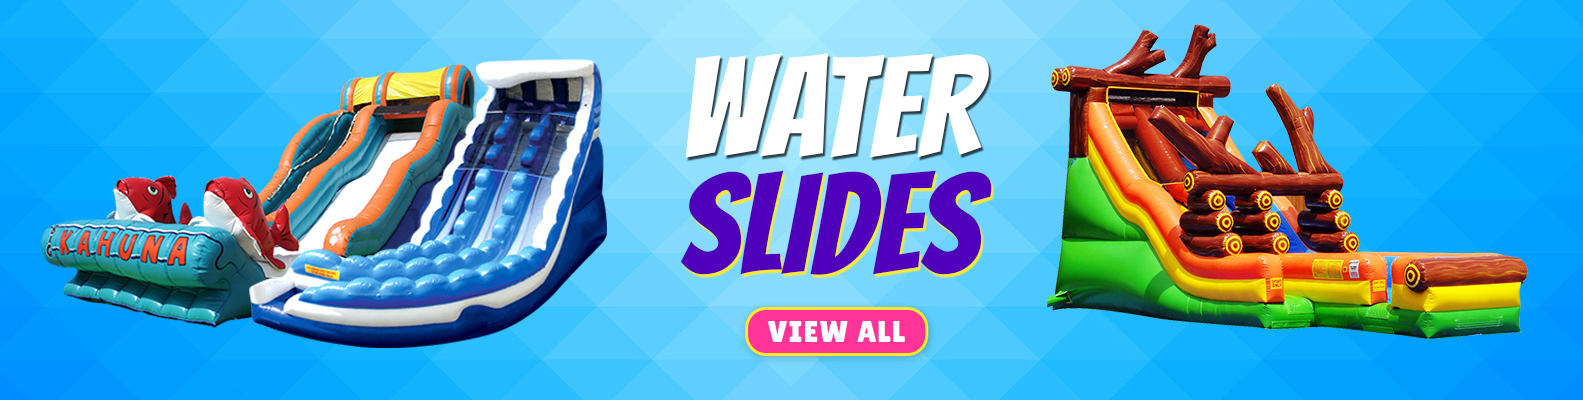 inflatable water slide rentals in Scottsdale